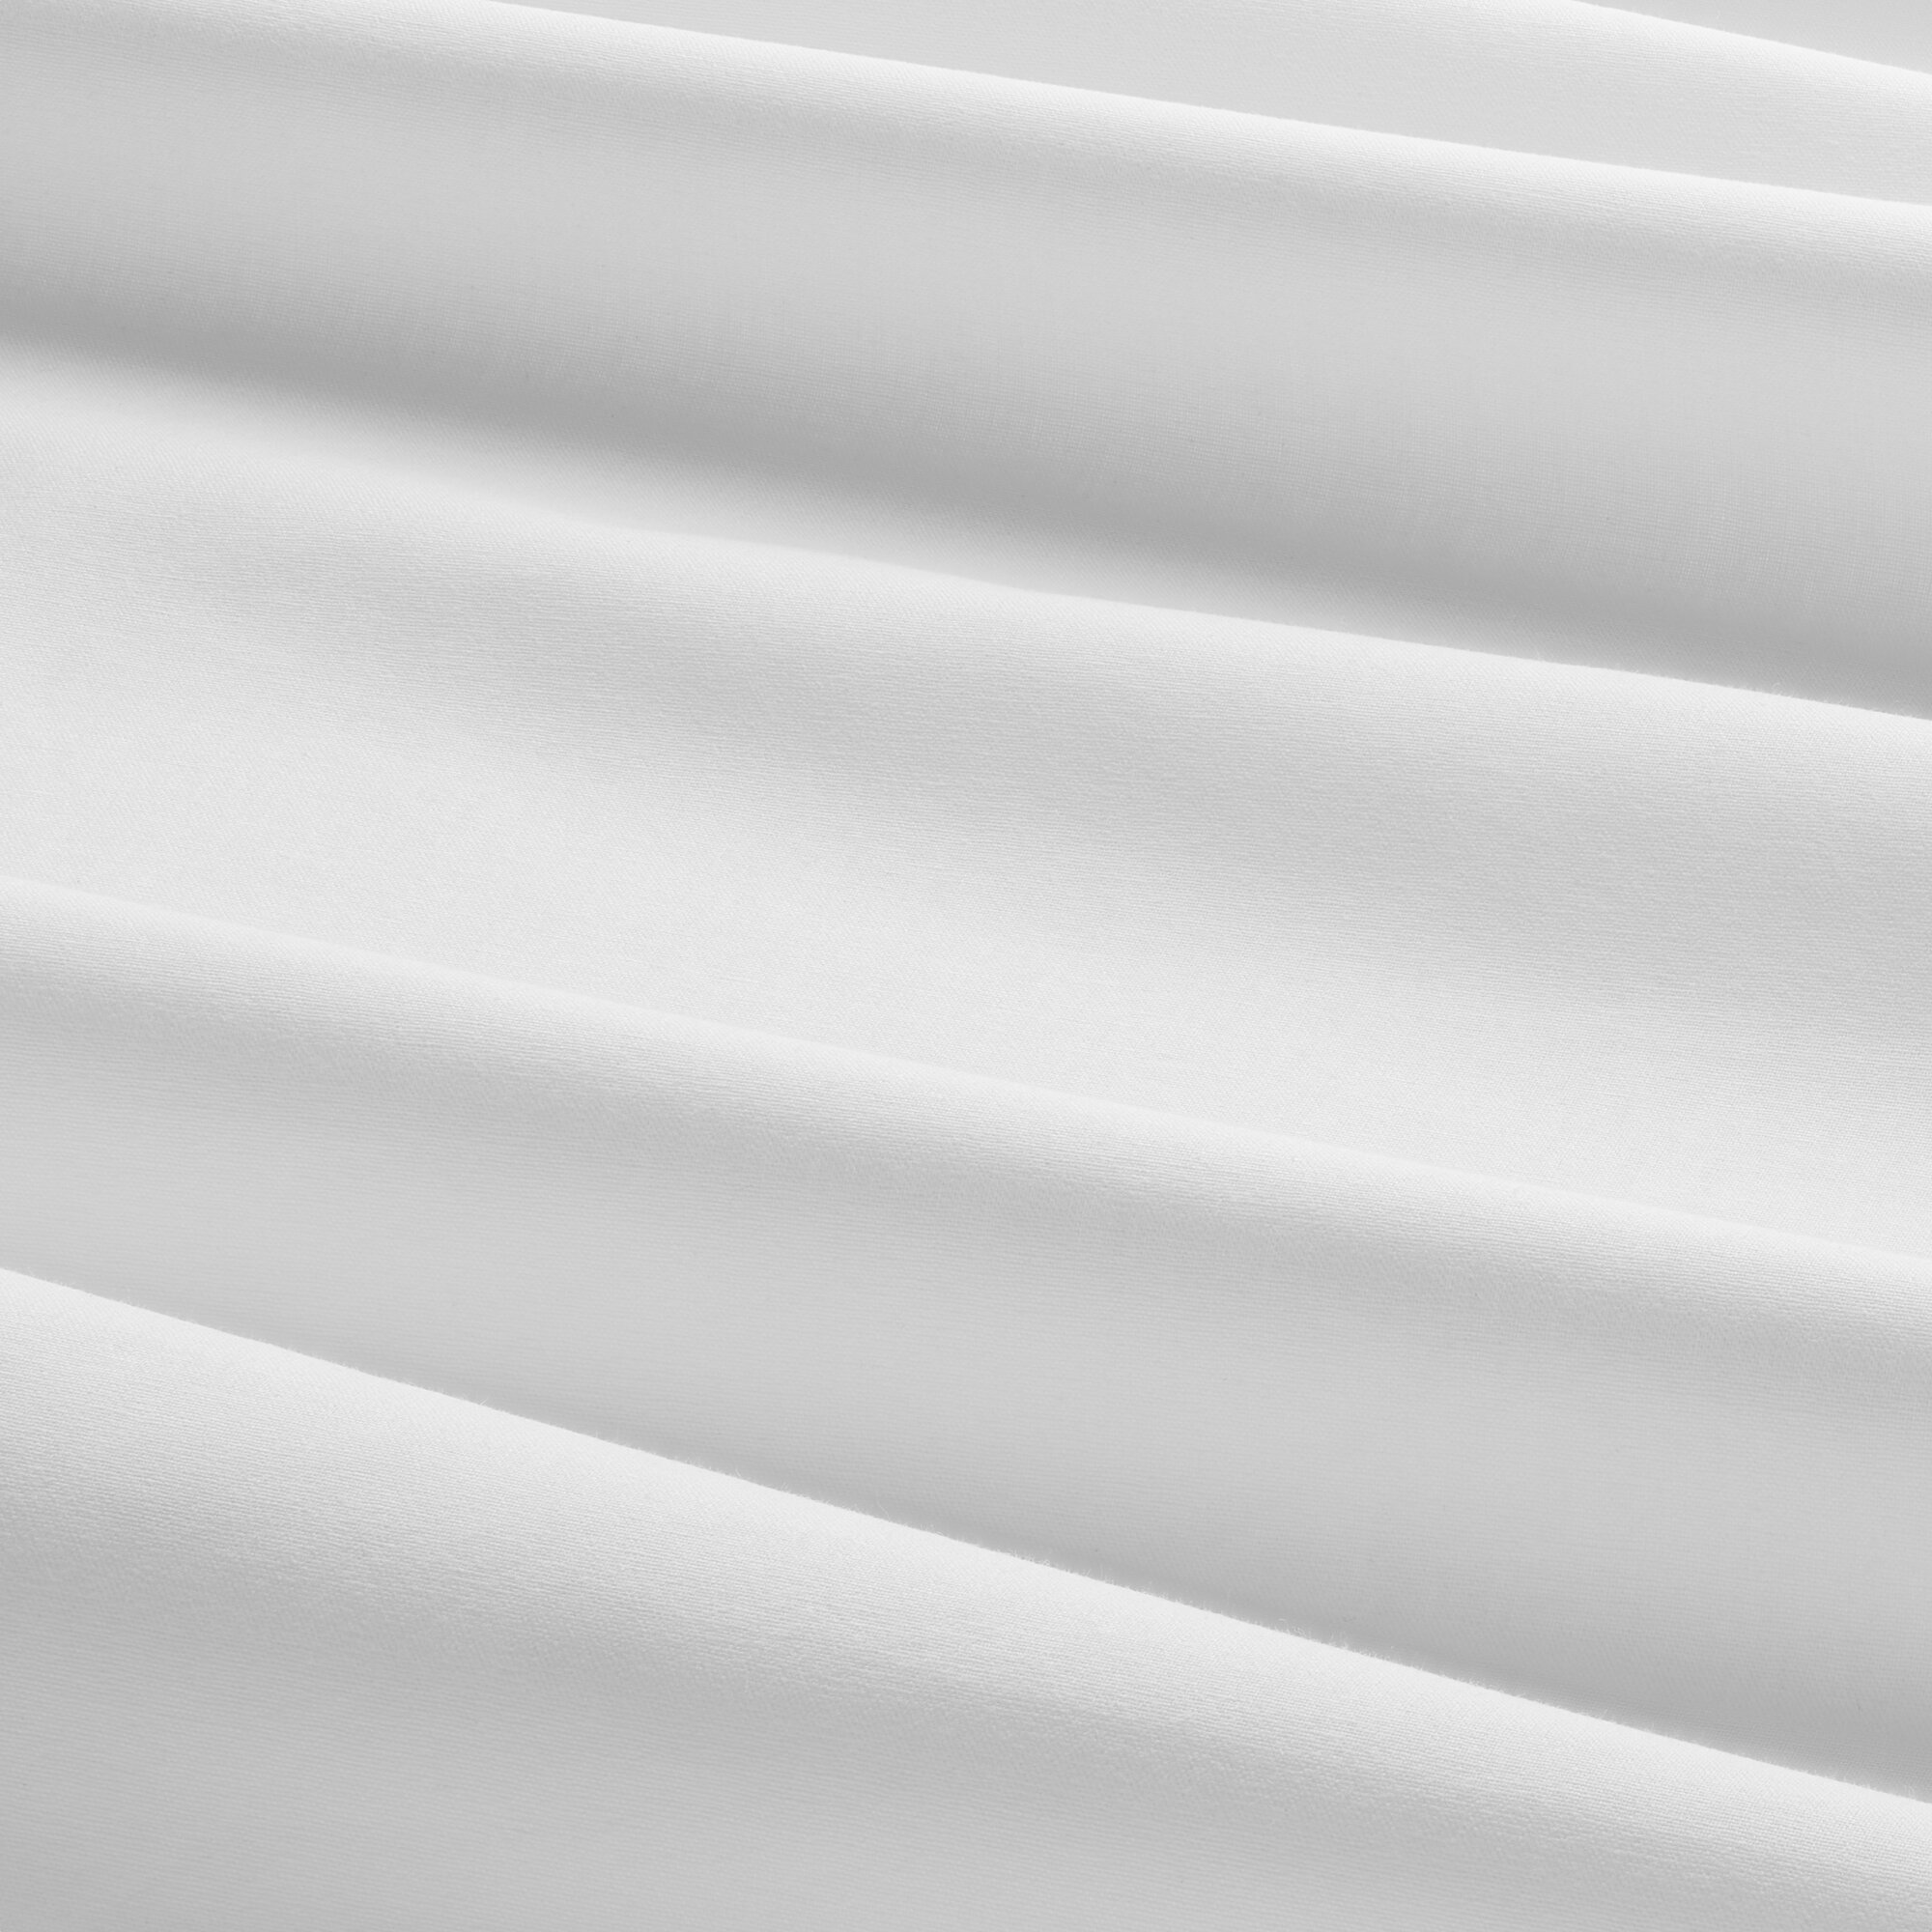 Простыня на резинке Pragma Telso облачный белый, 180х200 см